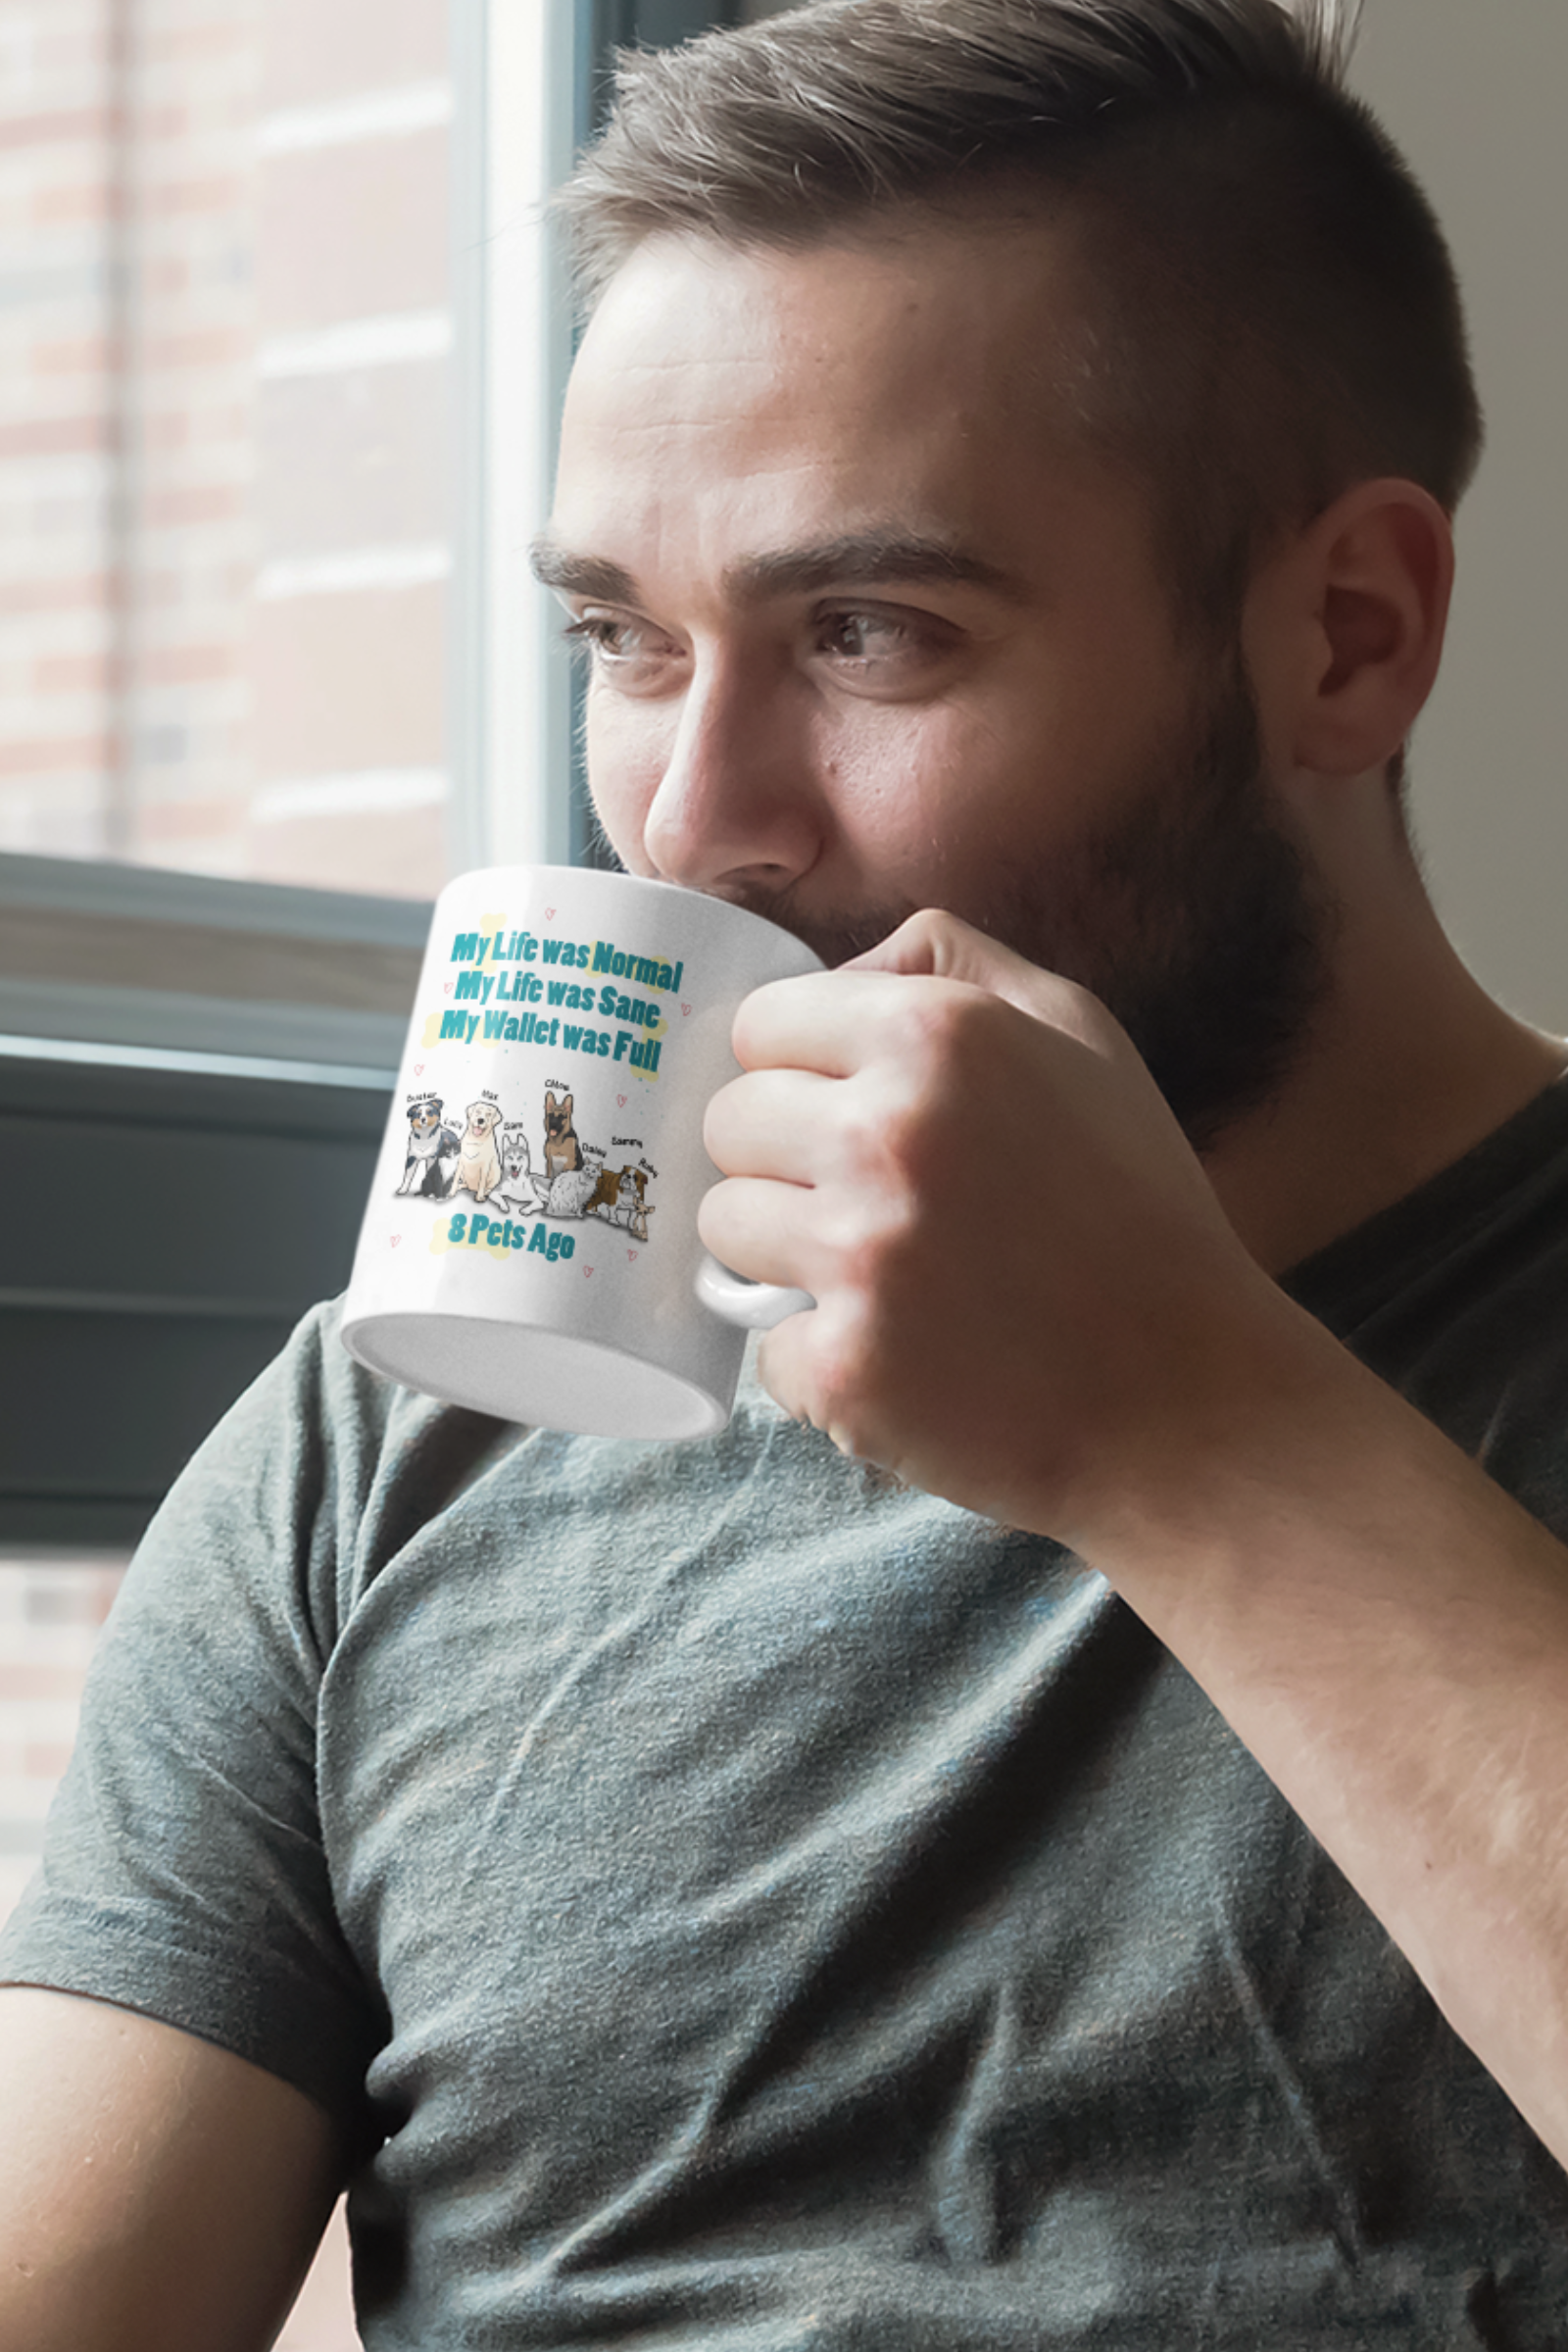 8 Pets Ago Themed Coffee Pet Lover Mug